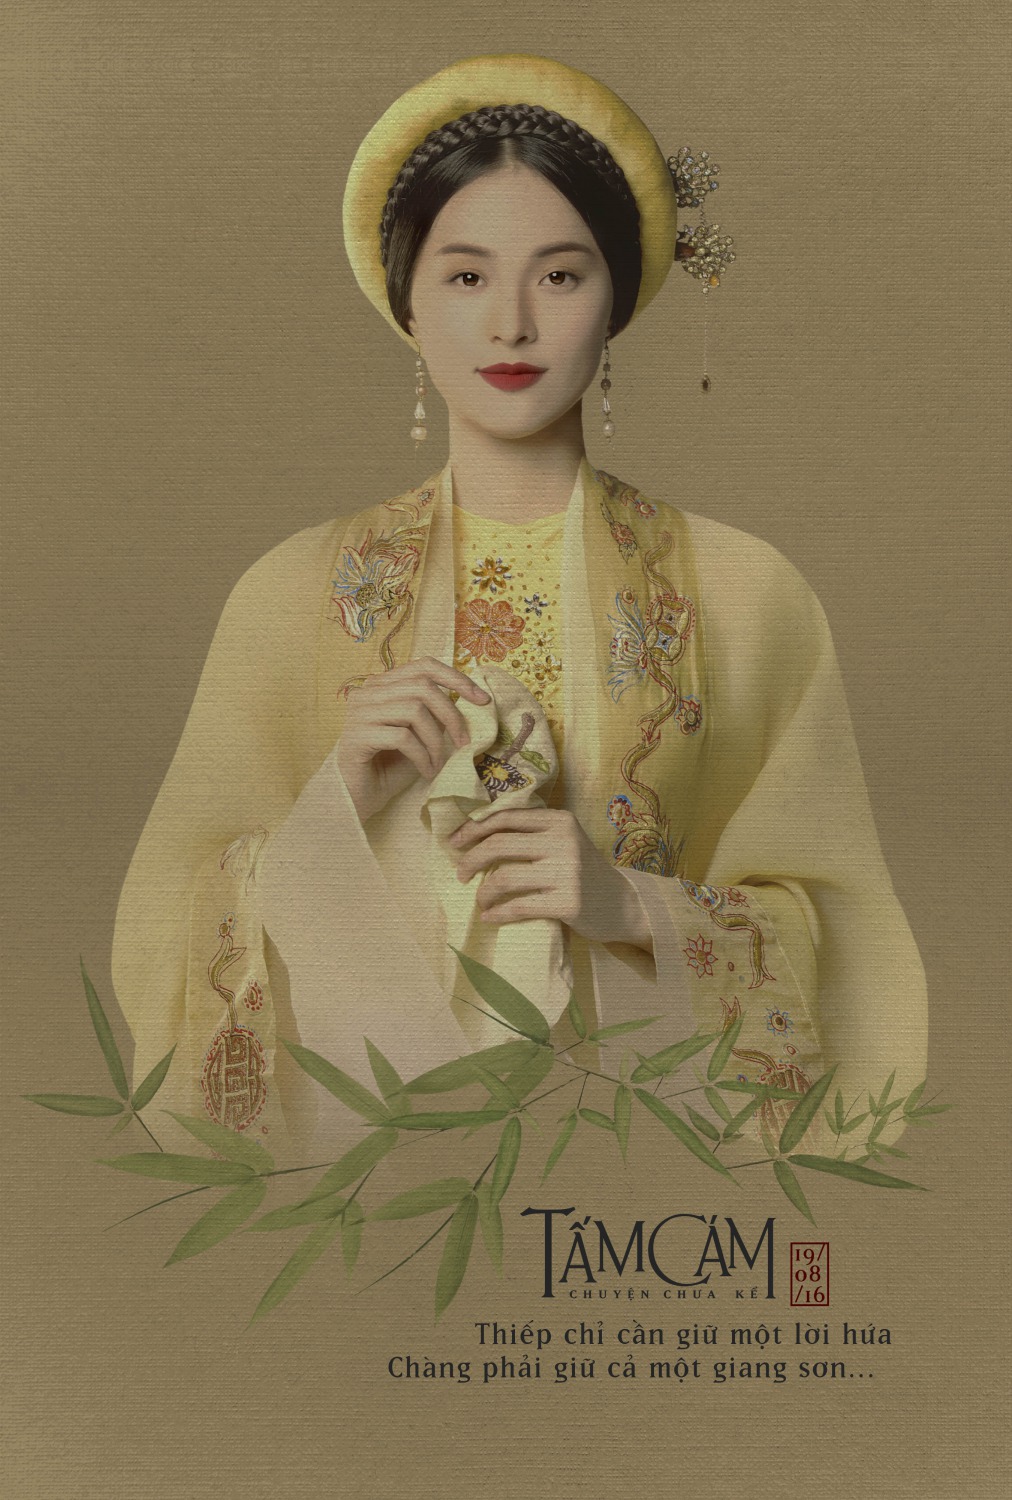 Extra Large Movie Poster Image for Tam Cam: Chuyen Chua Ke (#2 of 15)